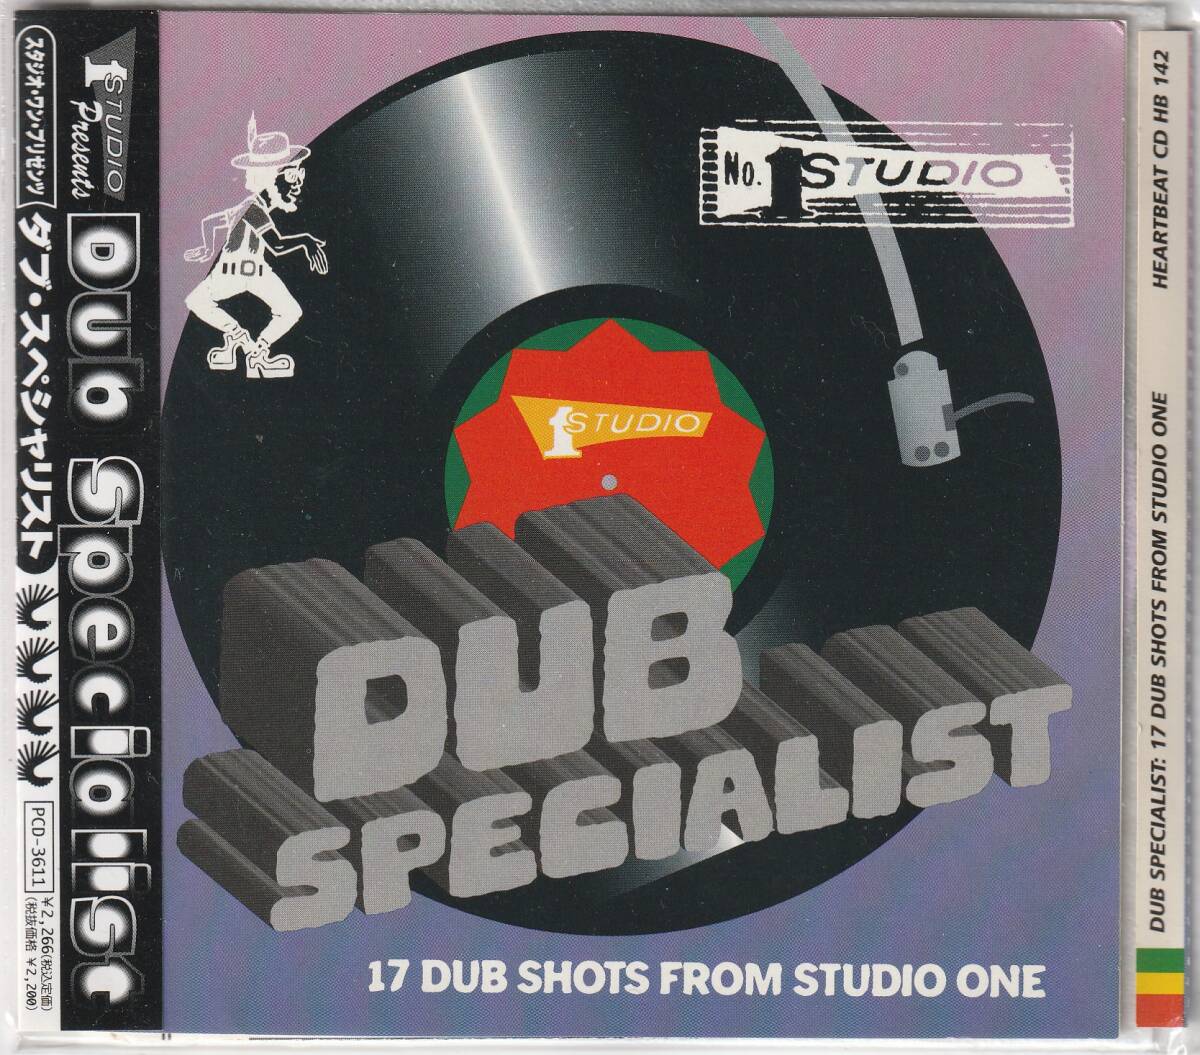 US盤CD★Studio One Dub Specialist★17 Dub Shots From Studio One★95年★Heat Beat★試聴可能_画像1